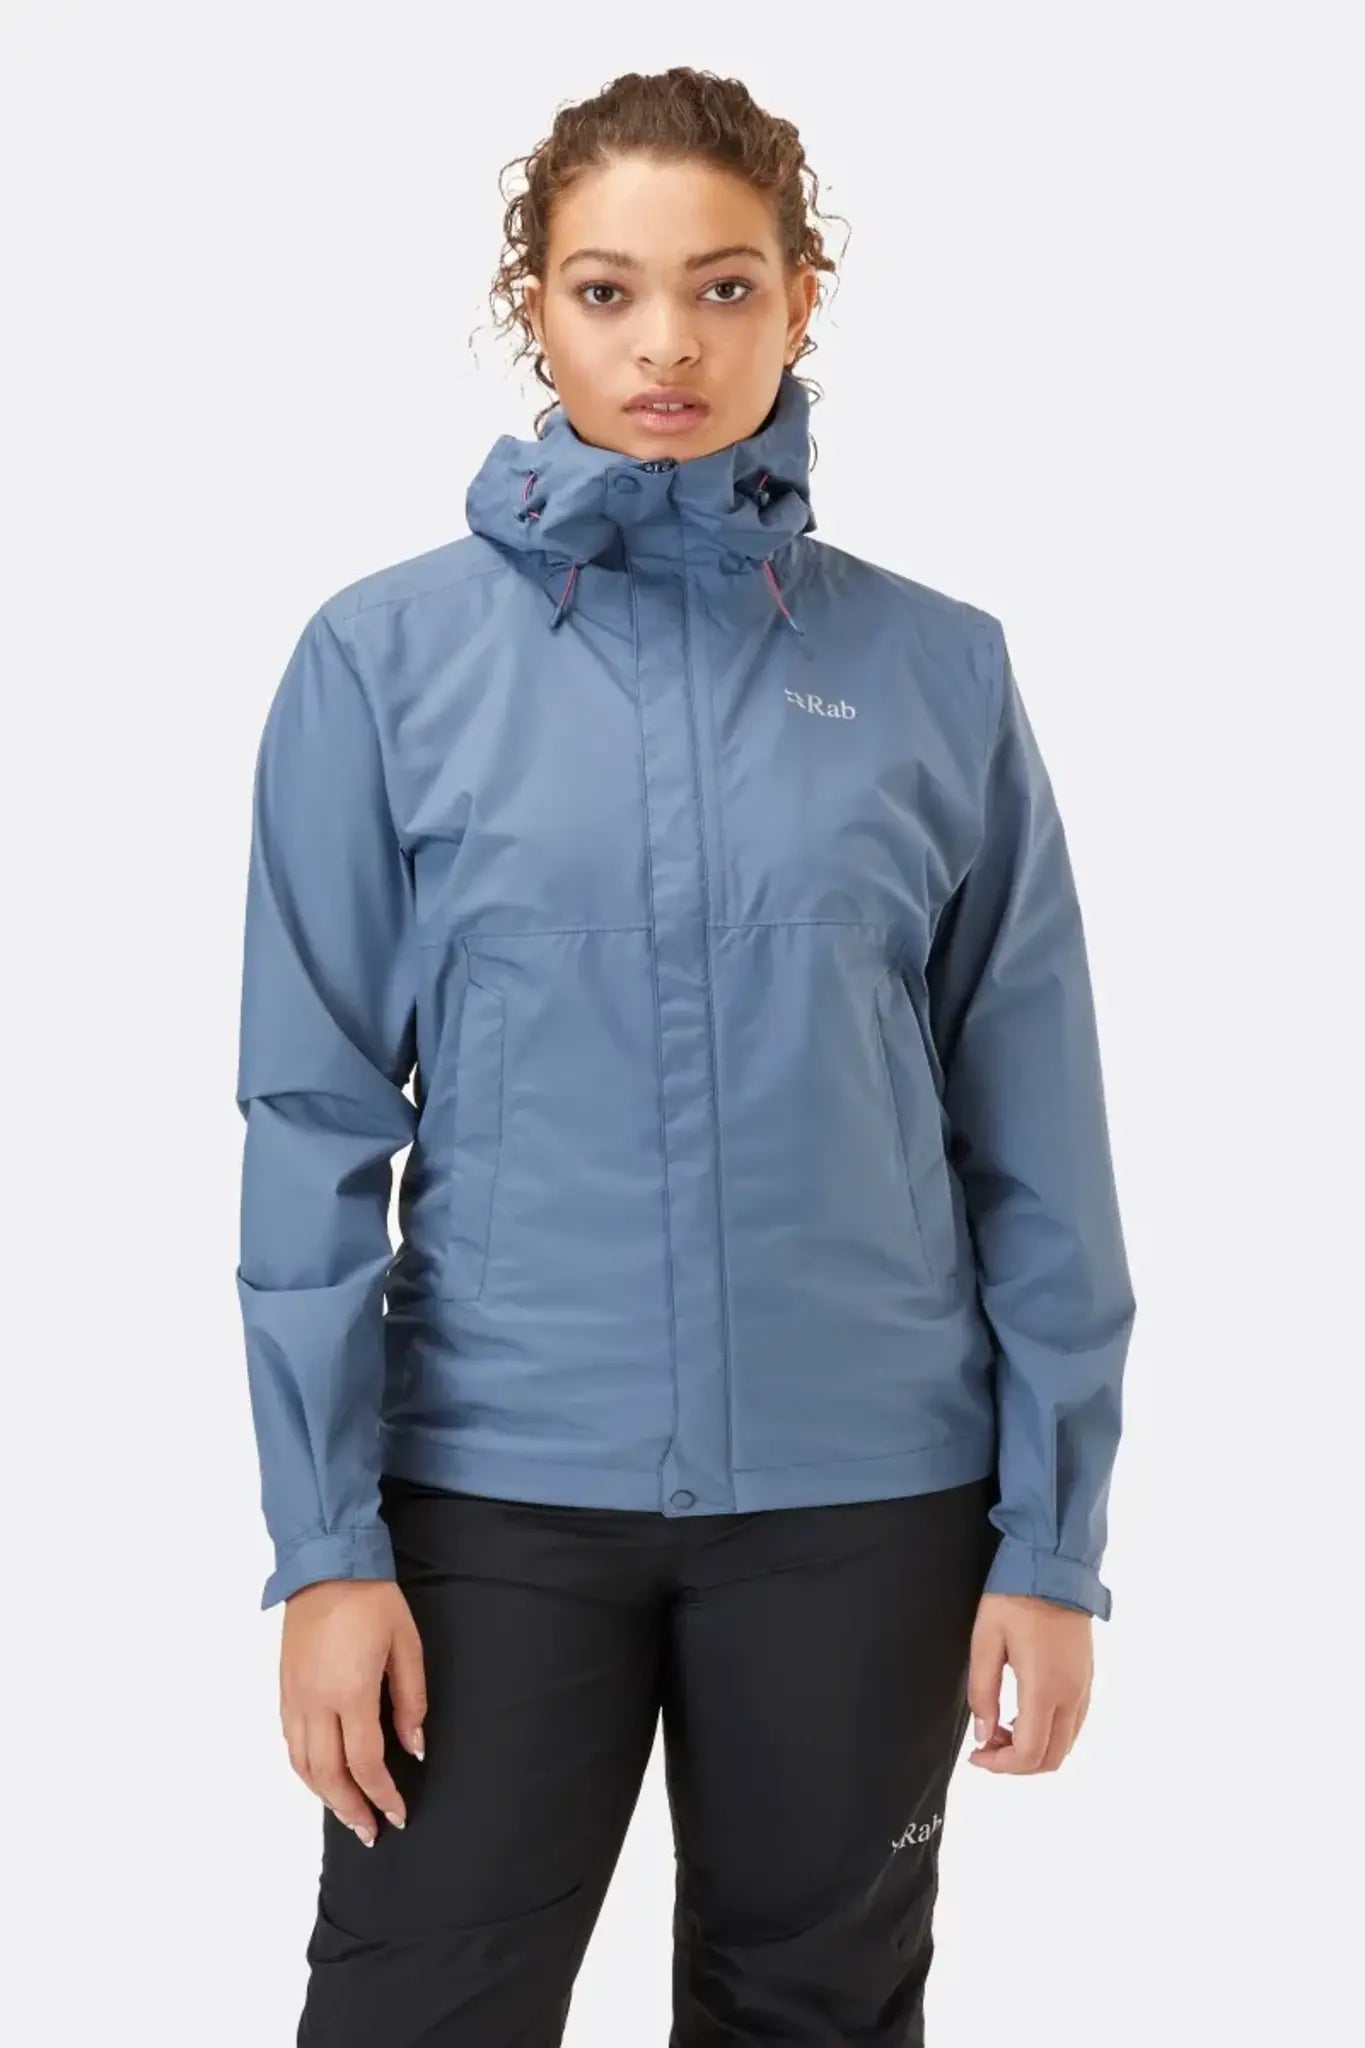 【英國 RAB】Downpour Eco Jacket 透氣防風防水連帽外套 女款 白令海藍 #QWG83